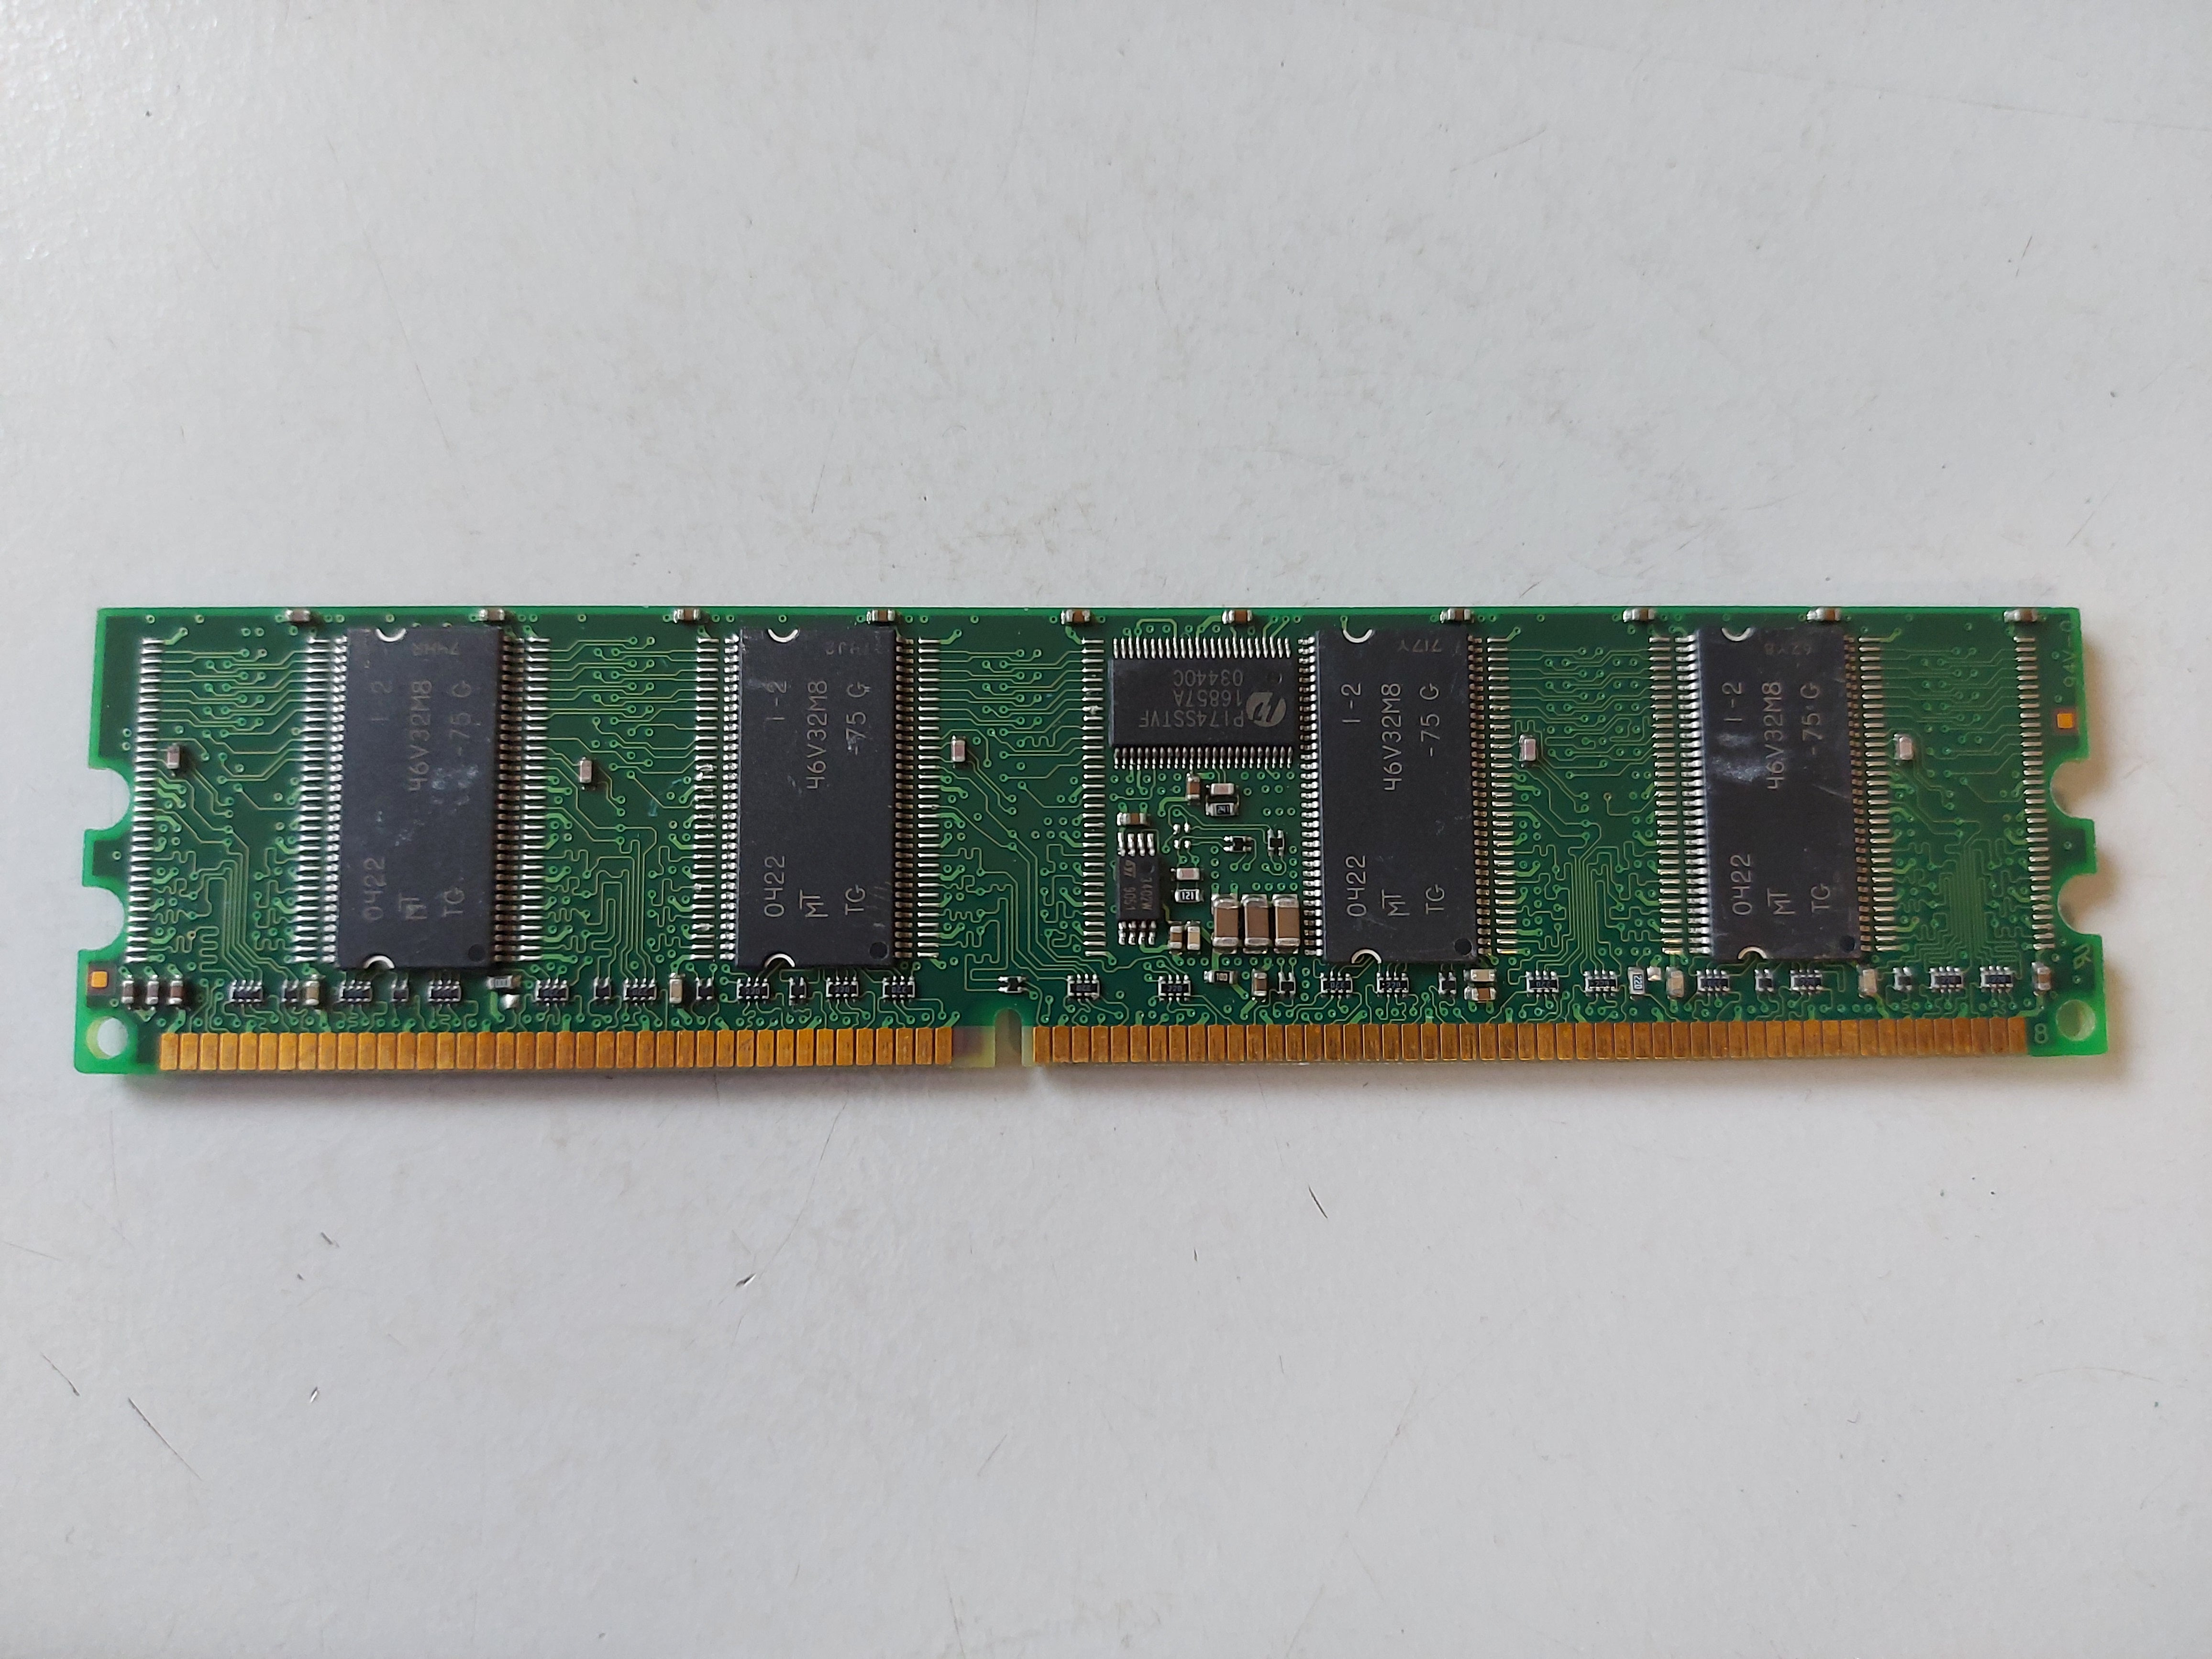 Patriot 256MB PC2100 CL2.5 ECC Registered DDR DIMM ( PSD256266ER PS000096-A-A007511 ) REF